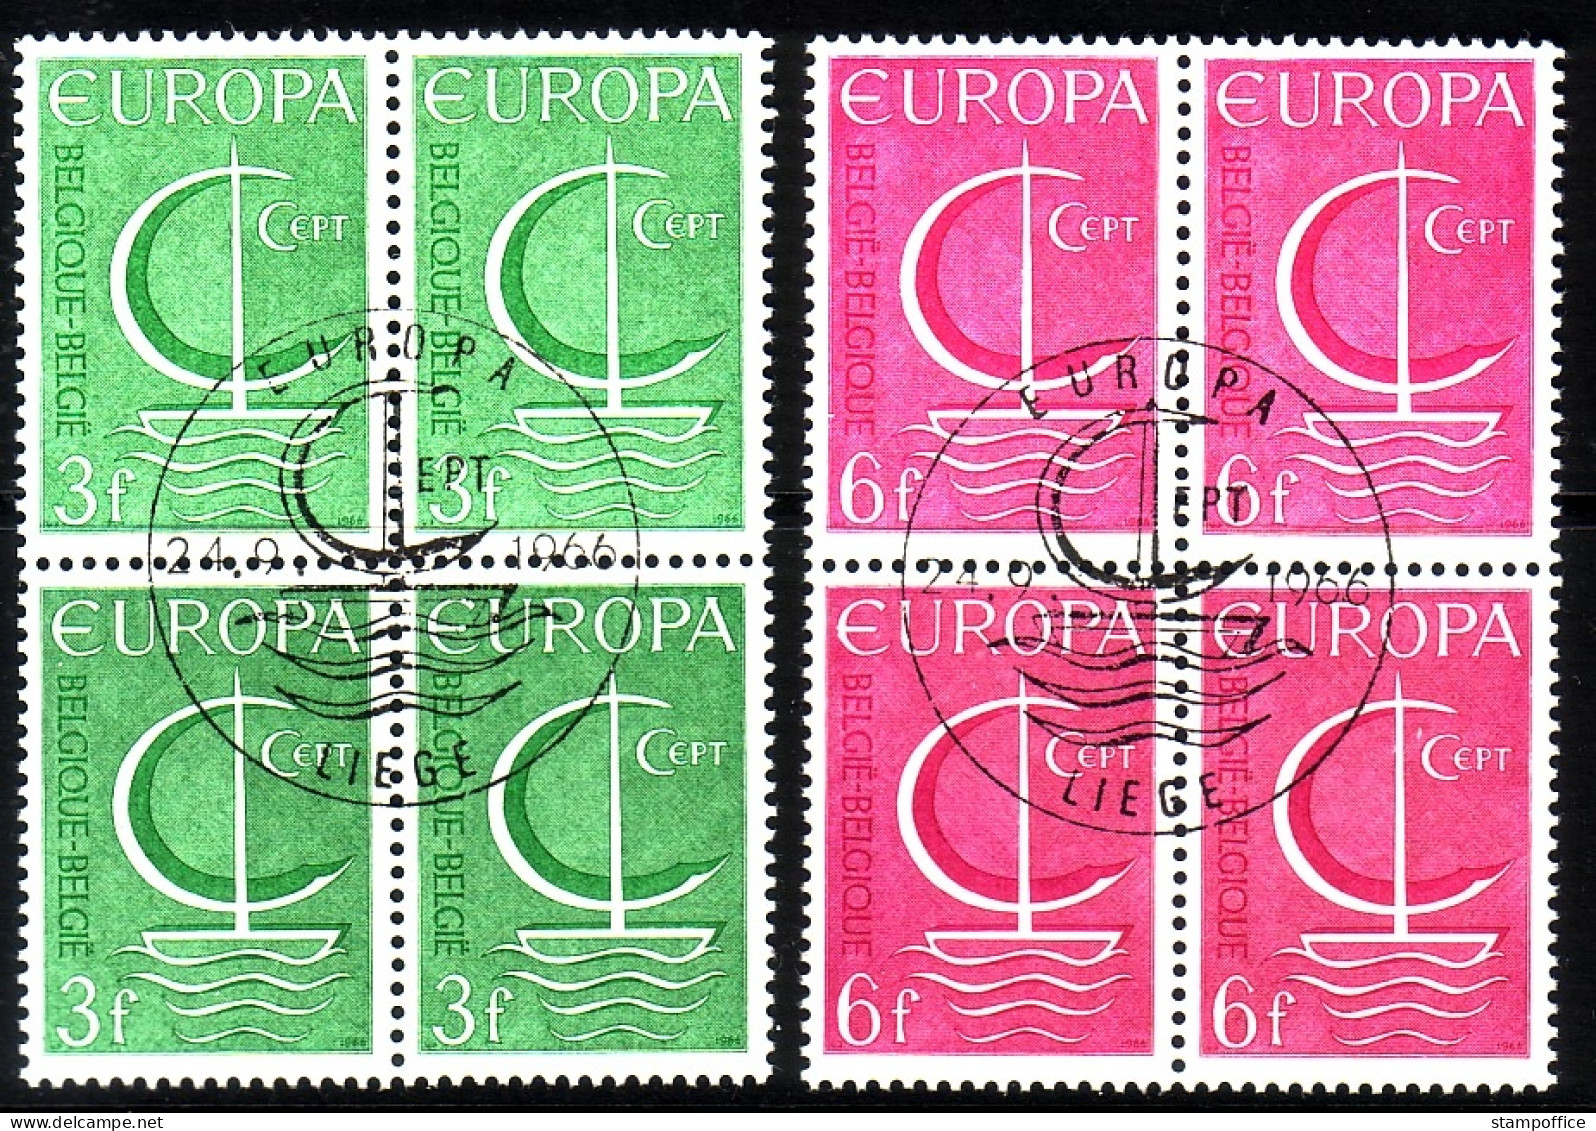 BELGIEN MI-NR. 1446-1447 GESTEMPELT(USED) 4er BLOCK EUROPA 1966 SEGEL - 1966